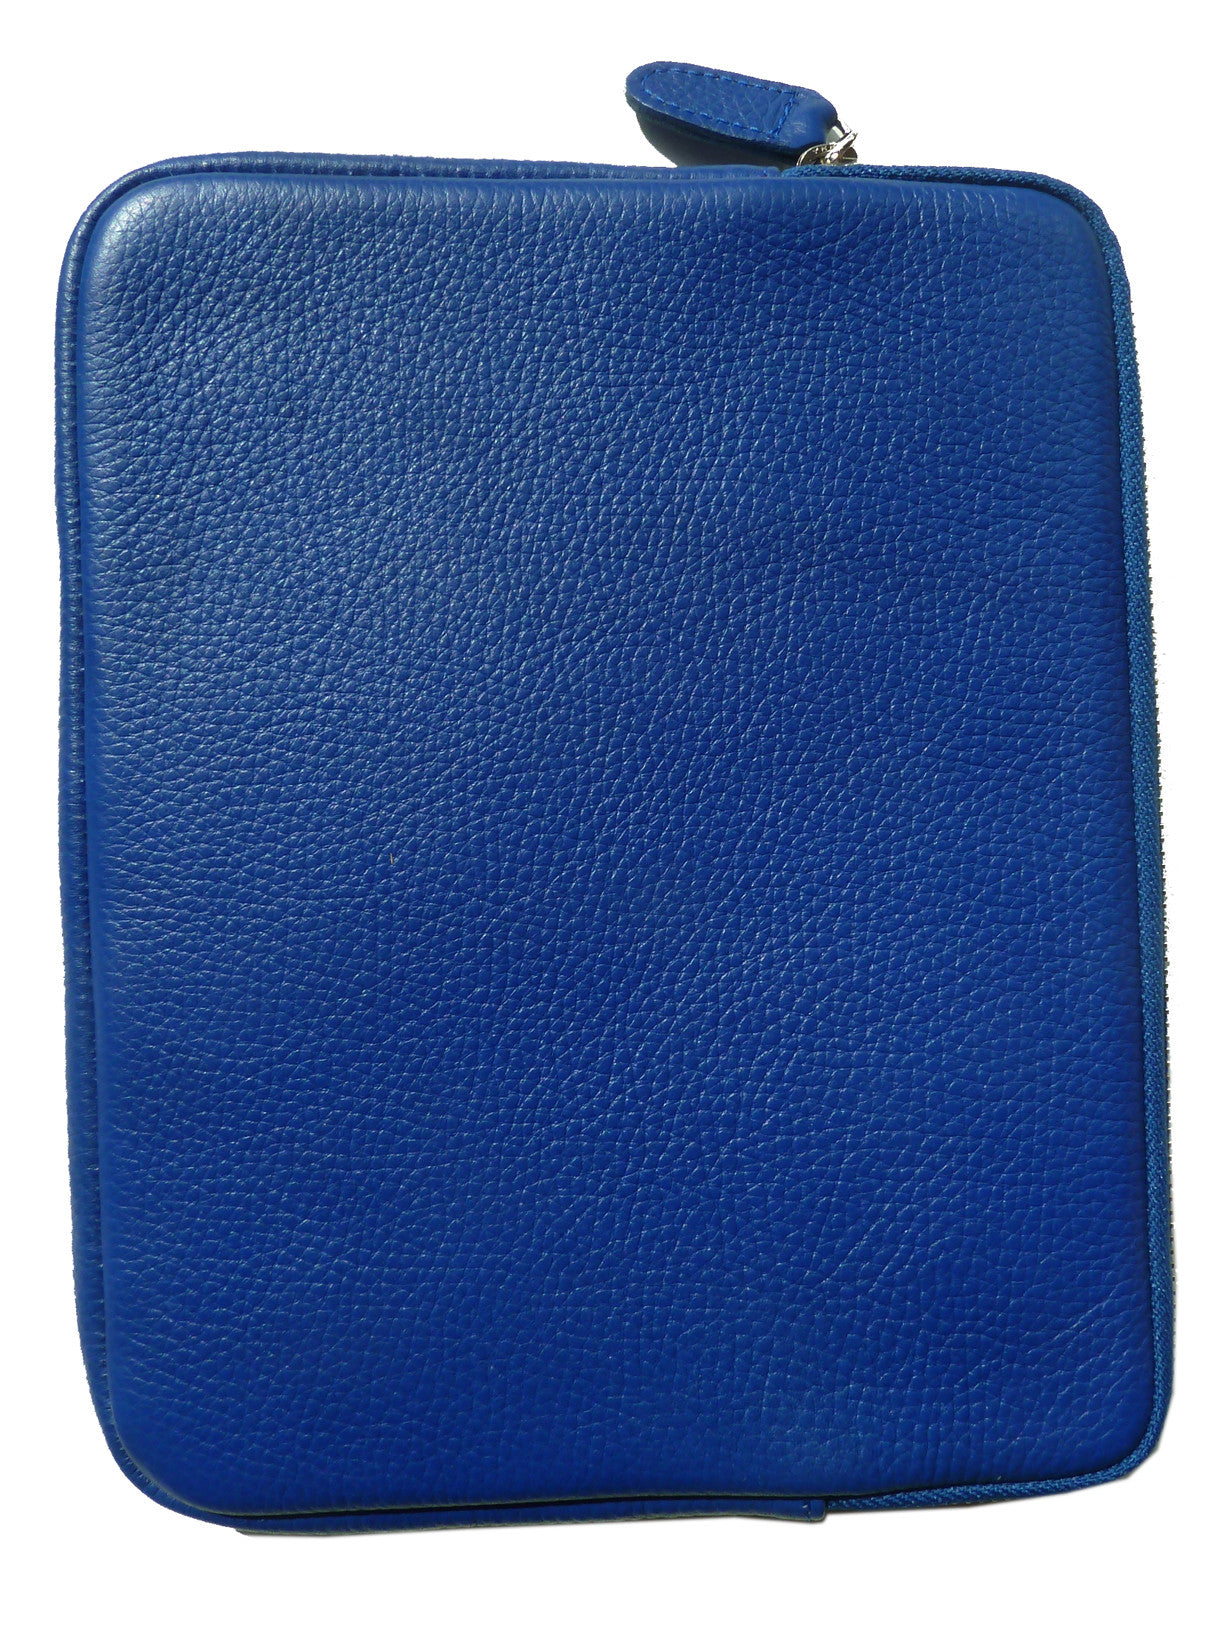 Ipad Case Pebble Grain Leather Cobalt Blue